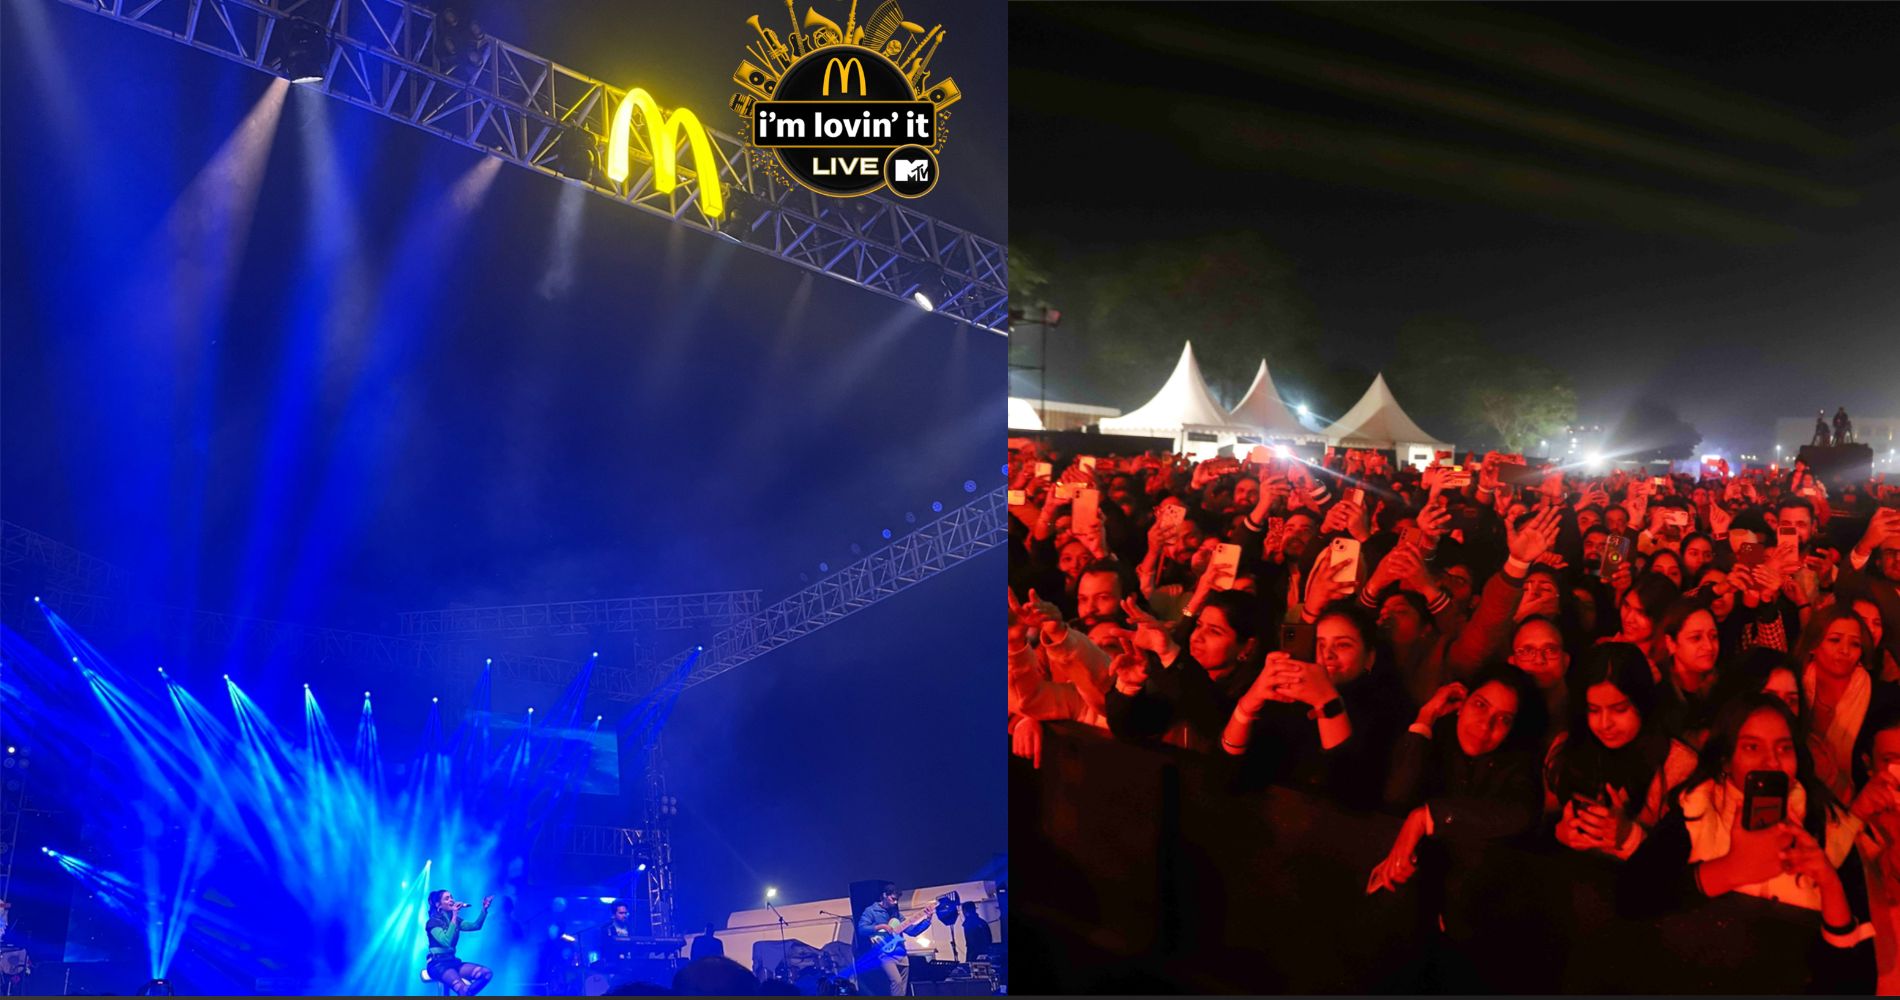 McDonald's i'm lovin' it Live Concert in partnership with MTV